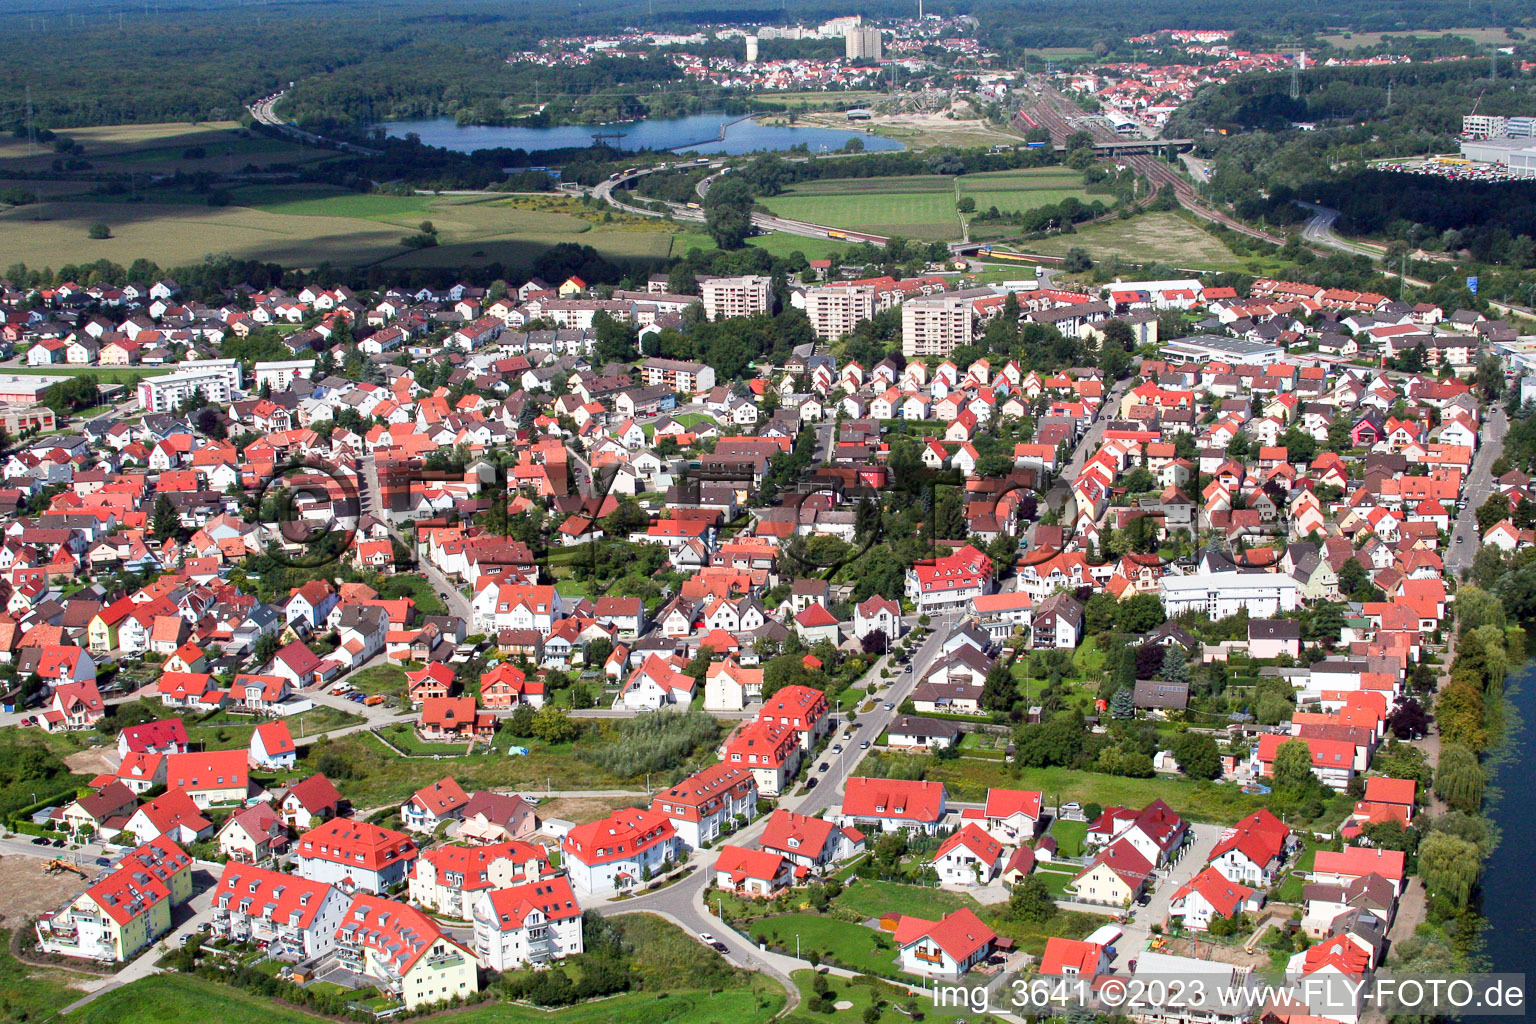 Drone recording of District Maximiliansau in Wörth am Rhein in the state Rhineland-Palatinate, Germany